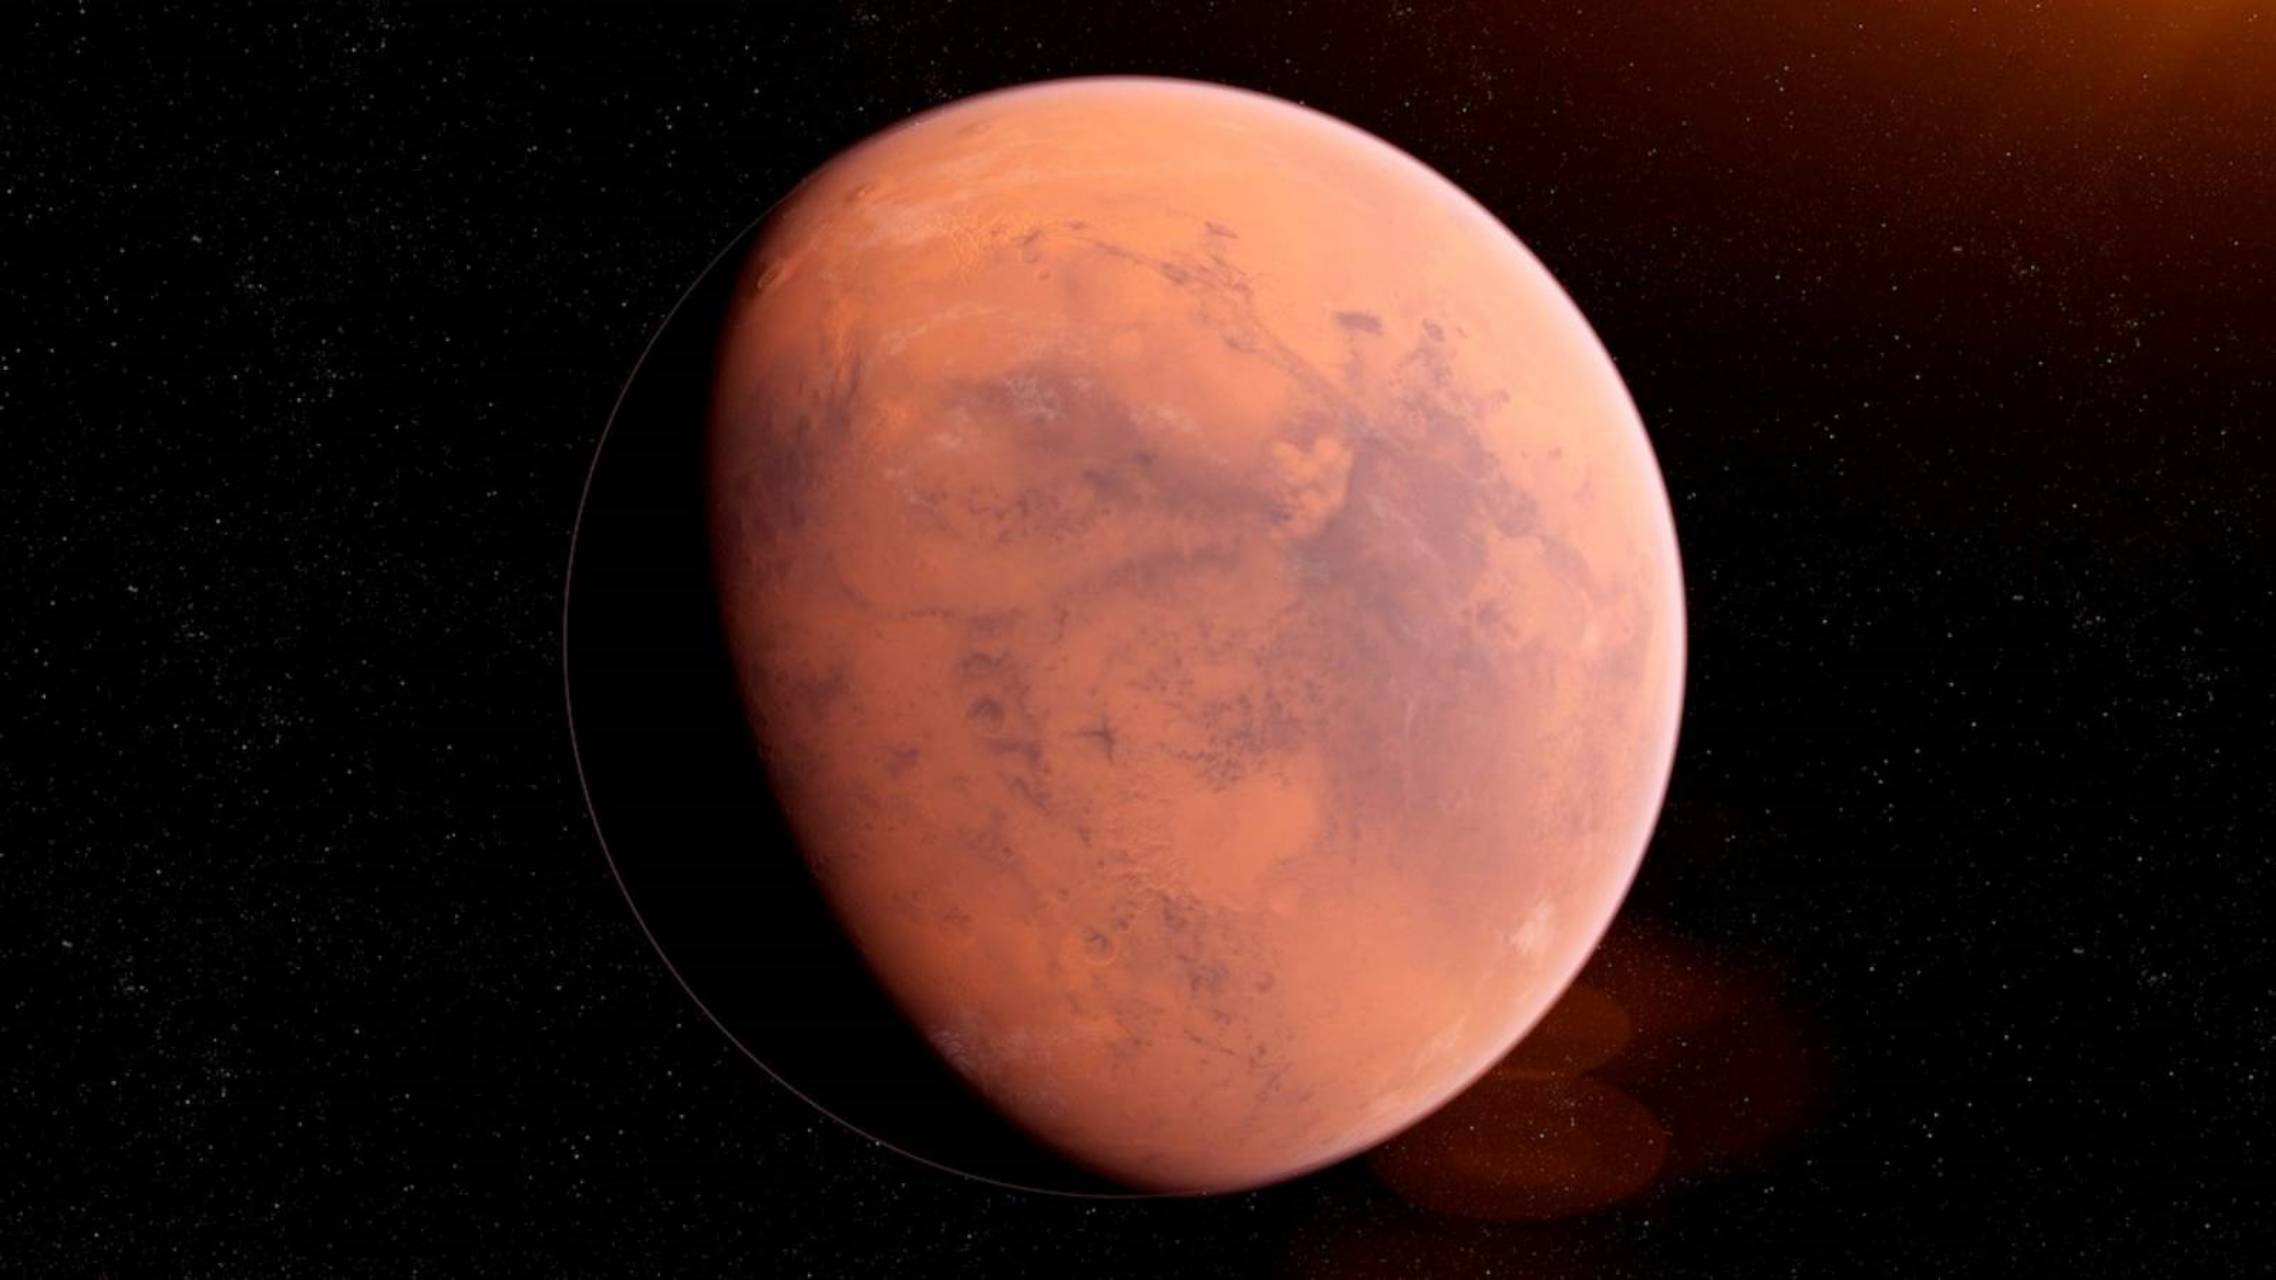 Anteprima del pianeta Marte